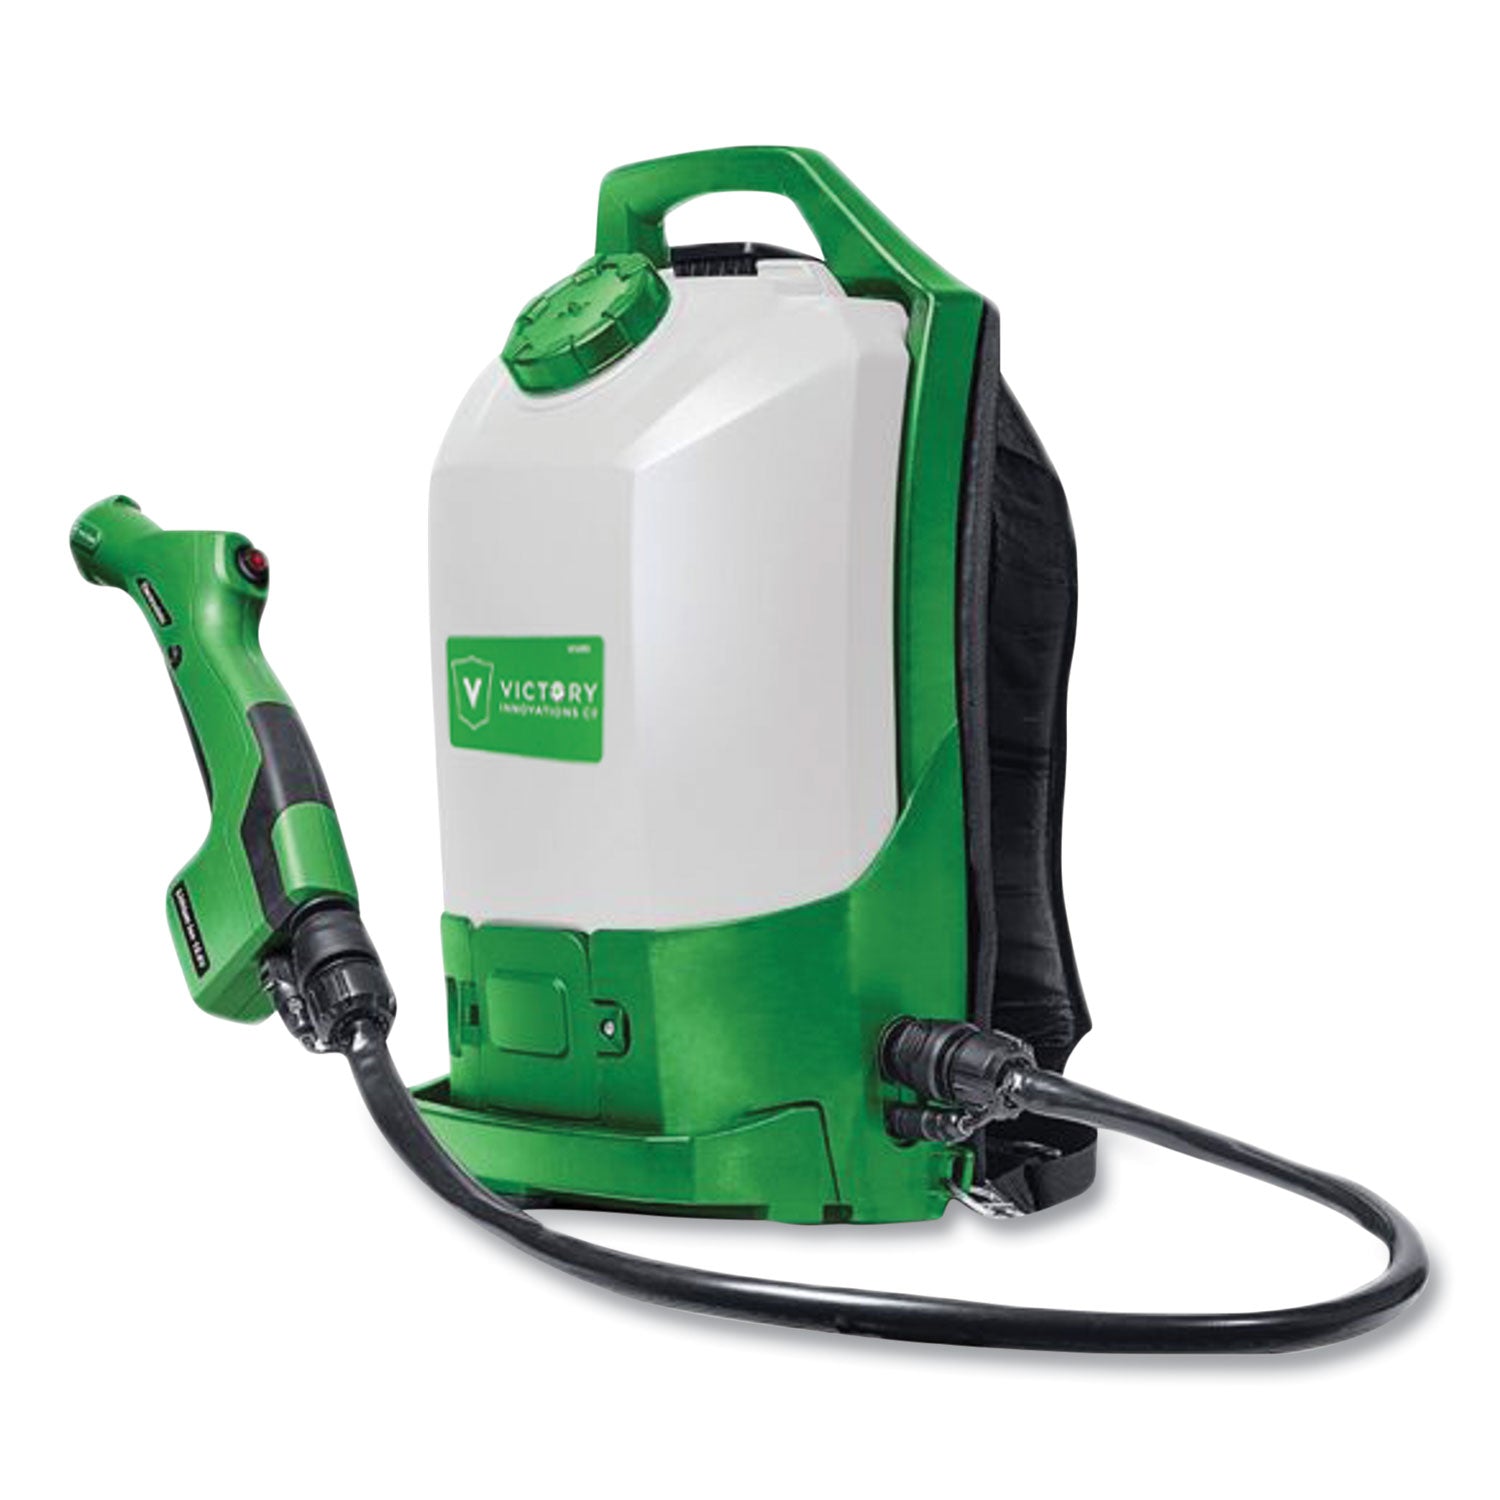 professional-cordless-electrostatic-backpack-sprayer-225-gal-065-x-48-hose-green-translucent-white-black_vivvp300esk - 1